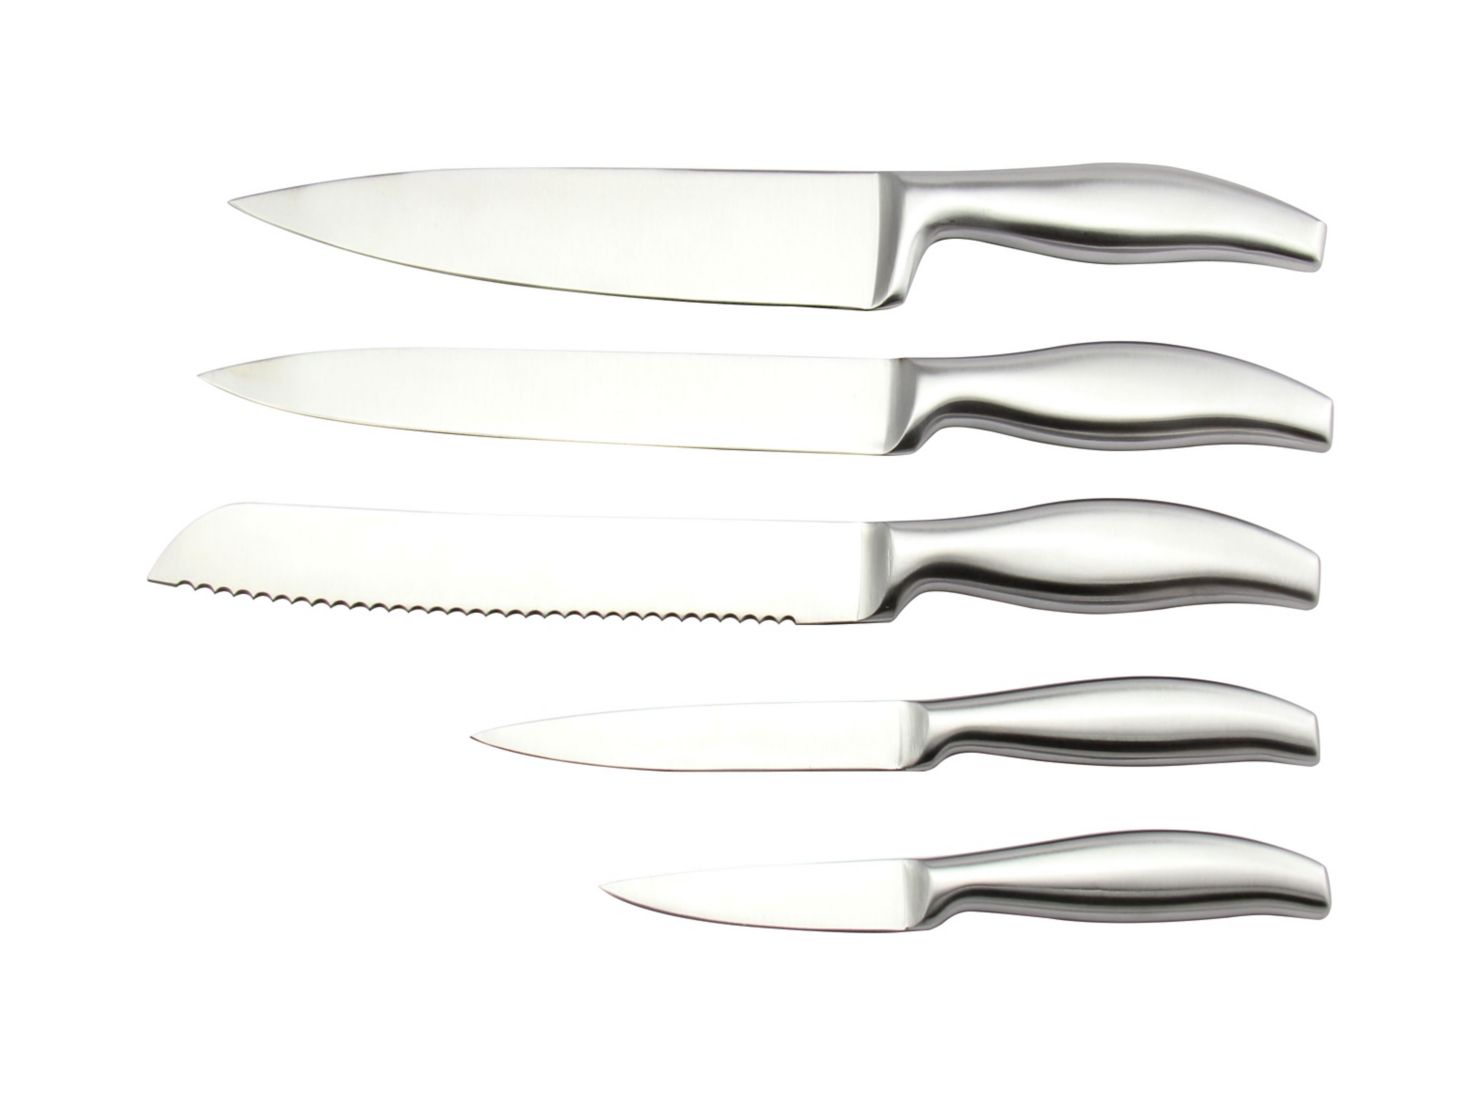 Combo Meister Chef: Set de 5 cuchillos + Chaira + Soporte de pie